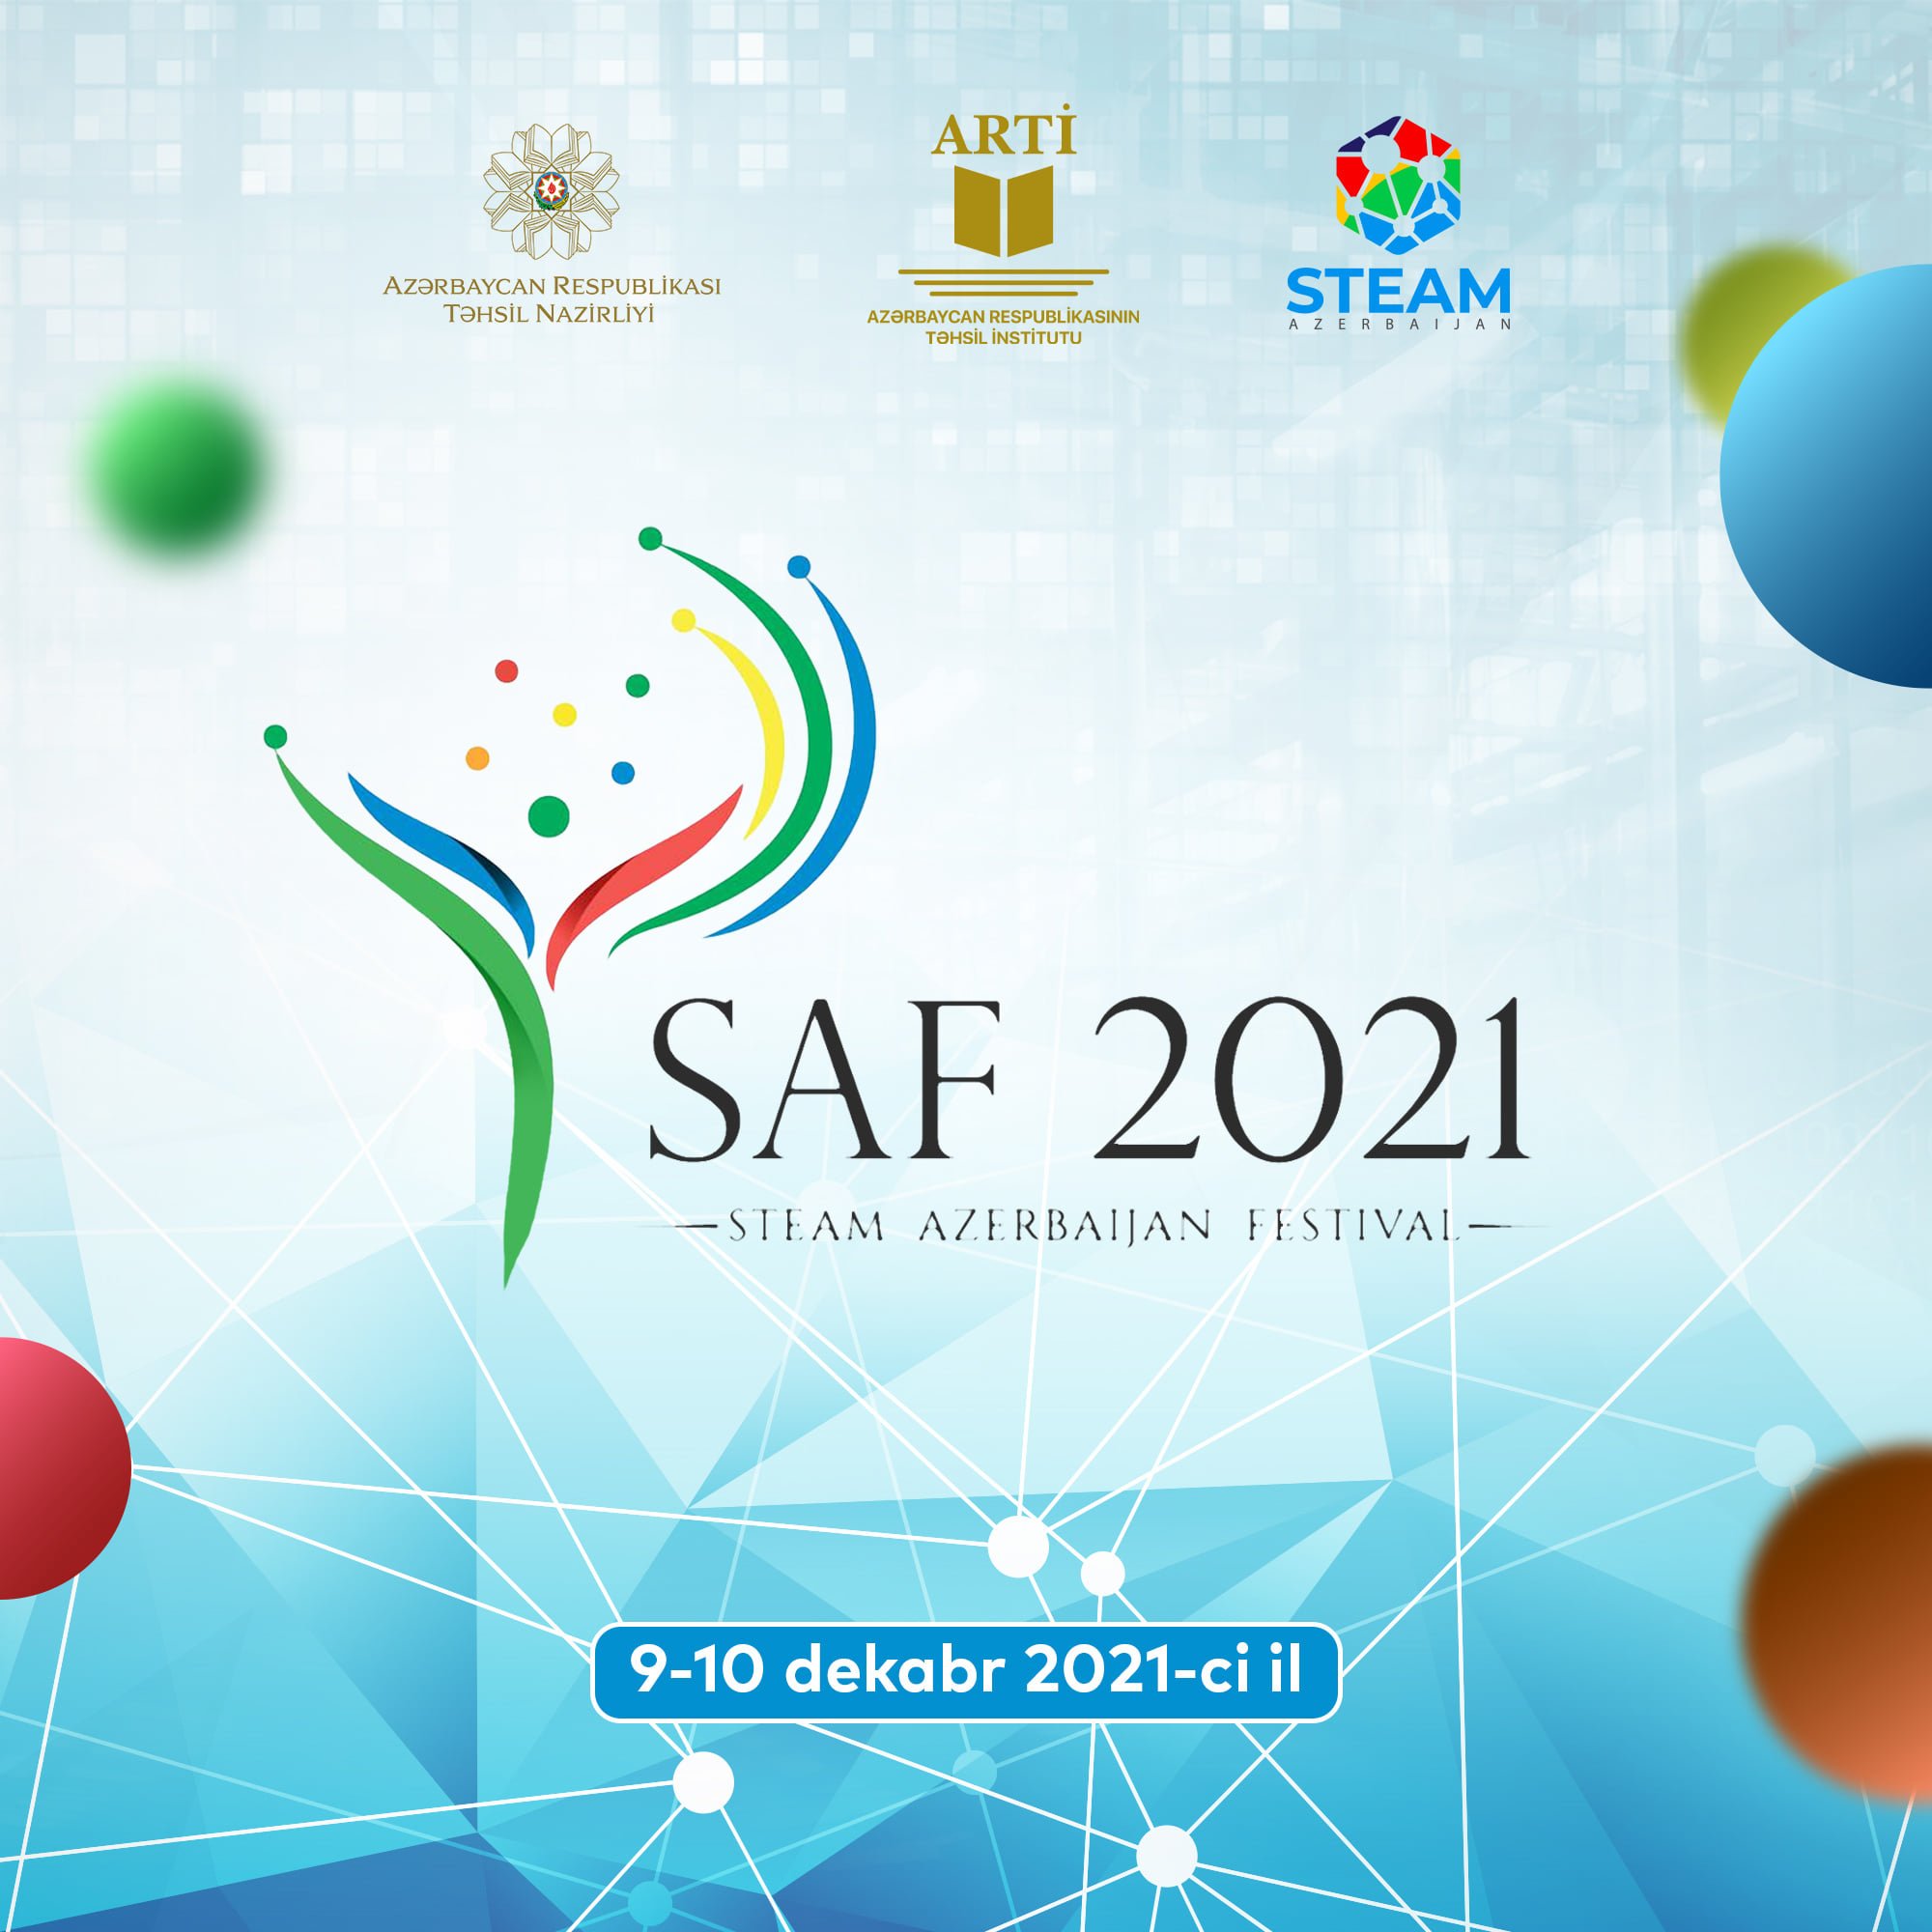 STEAM Azərbaycan Festivalına start verilir